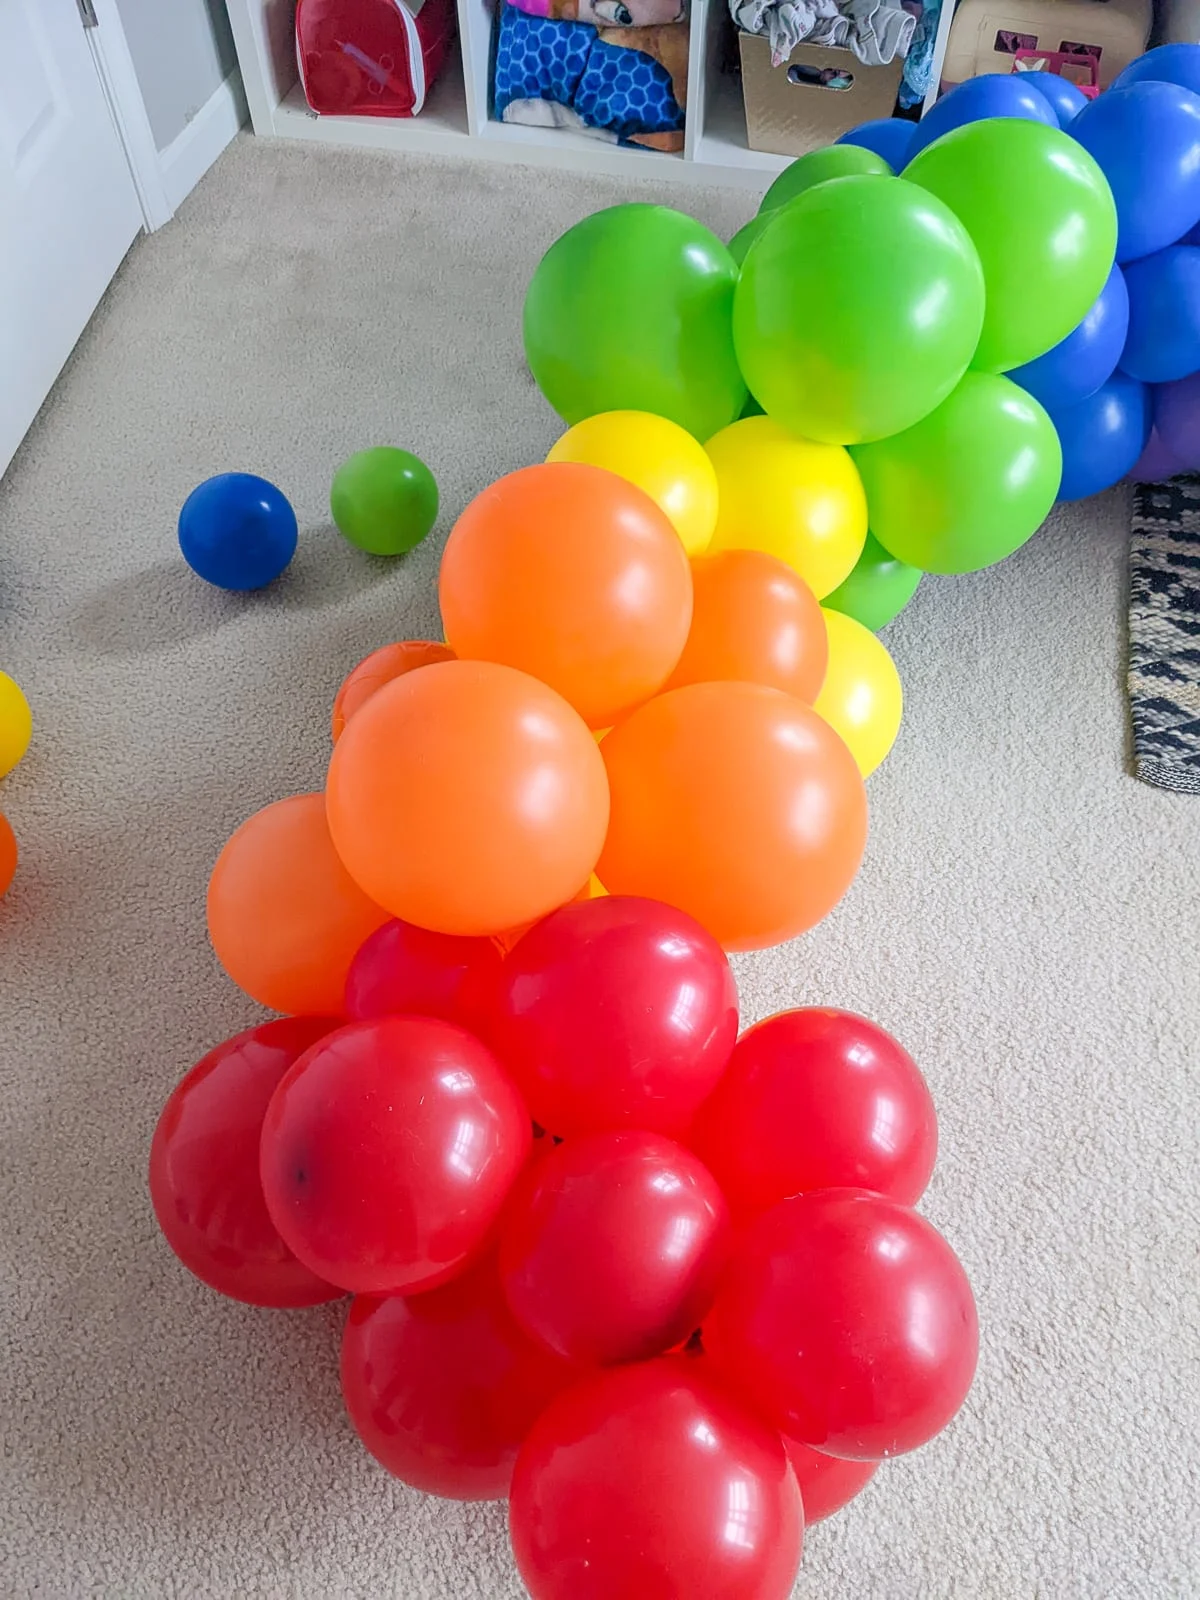 attaching balloons for a DIY balloon arch